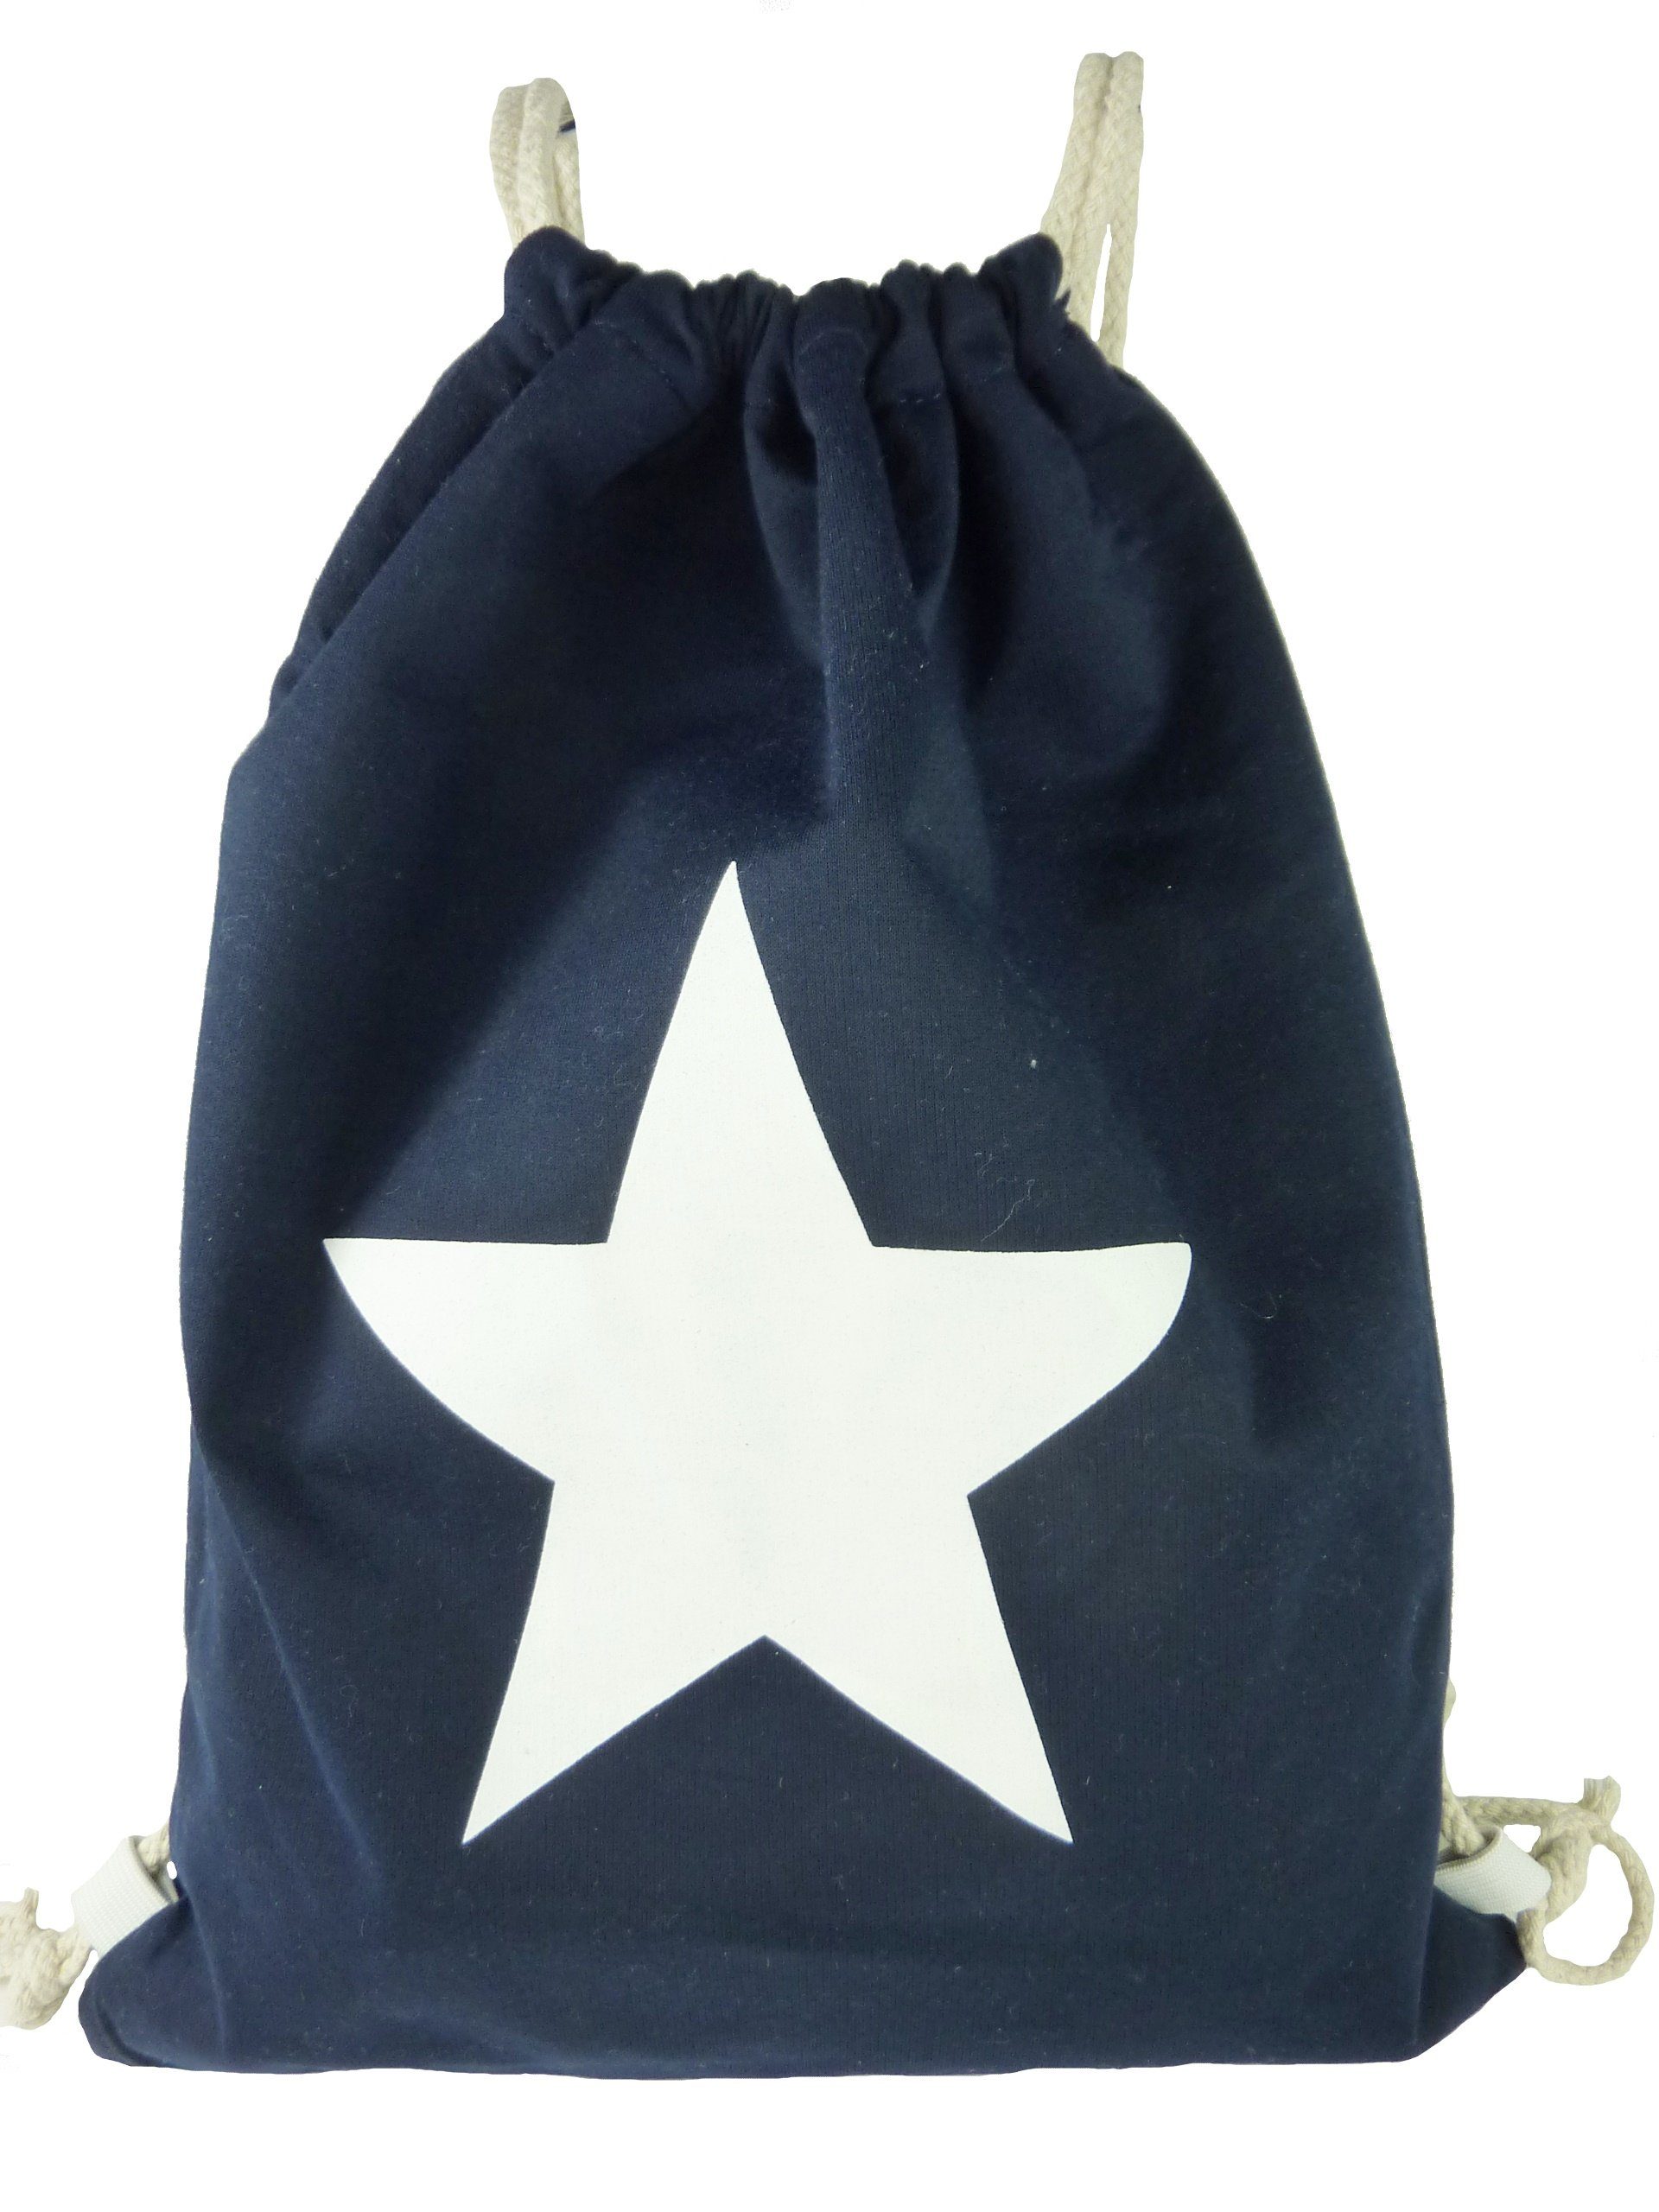 Taschen4life Gymbag Turnbeutel Rucksack 1605, mit großem Stern, Jute Beutel, sling bag, Sportbeutel marineblau